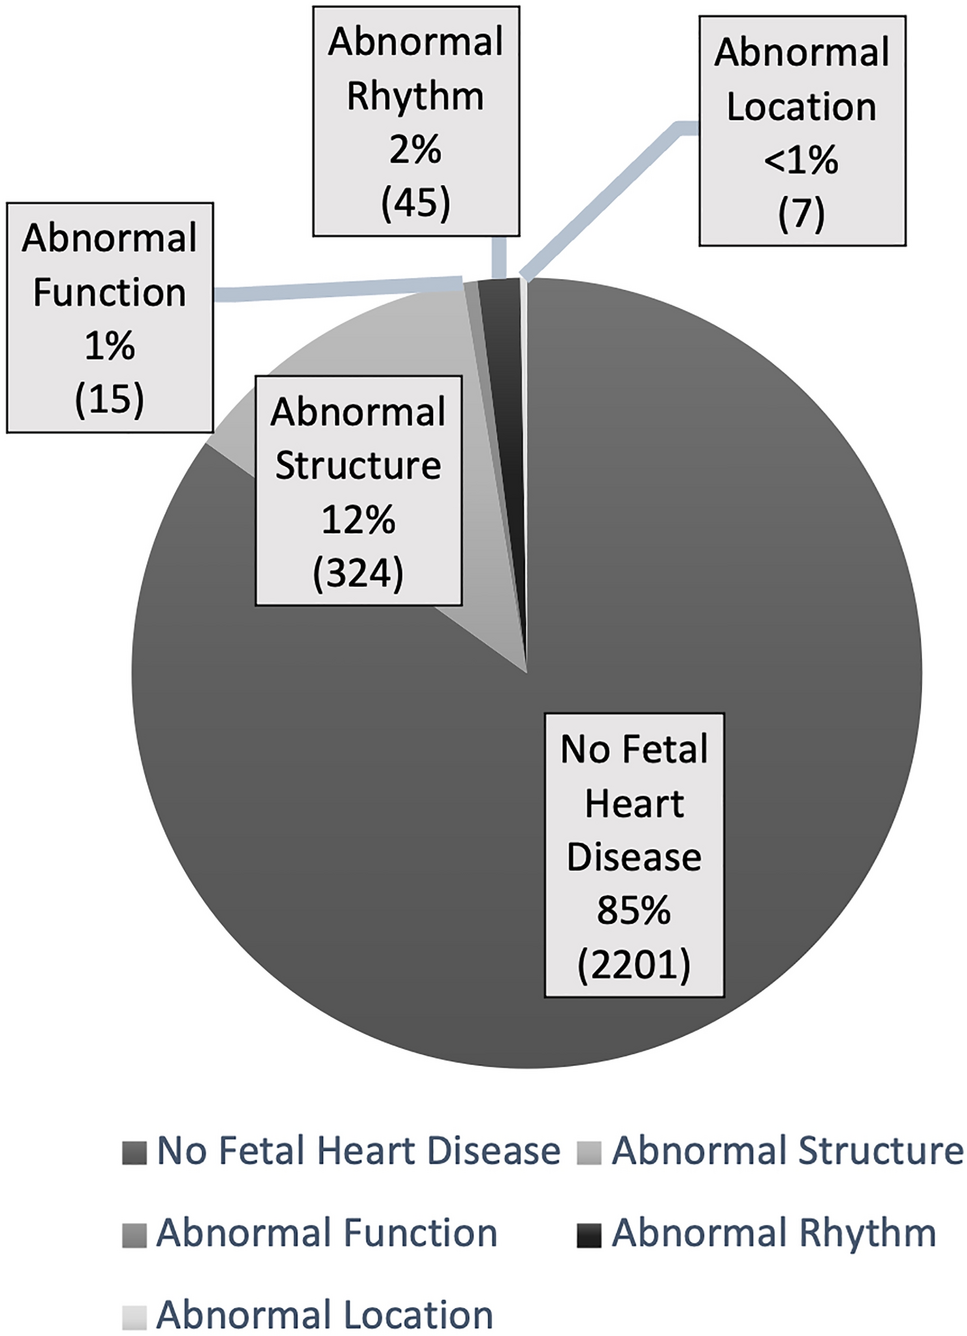 Prenatal Detection of Congenital Heart Disease: Importance of Fetal Echocardiography Following Normal Fetal Cardiac Screening